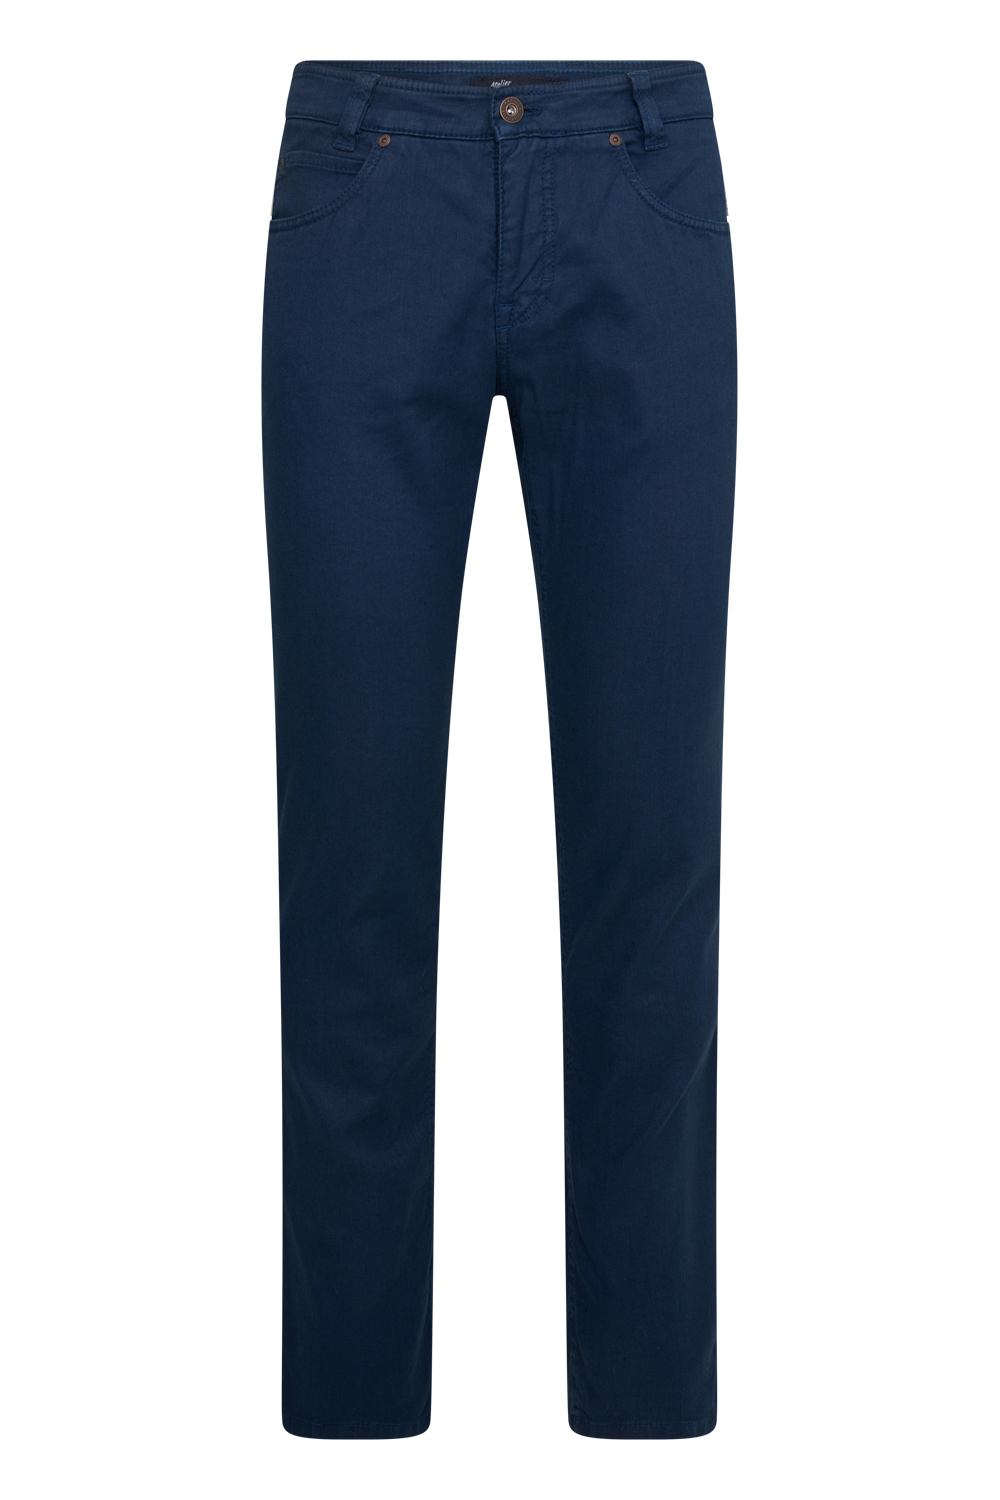 Gardeur - Bill-3 Modern Fit 5-Pocket Jeans Marine - 38/30 - Heren